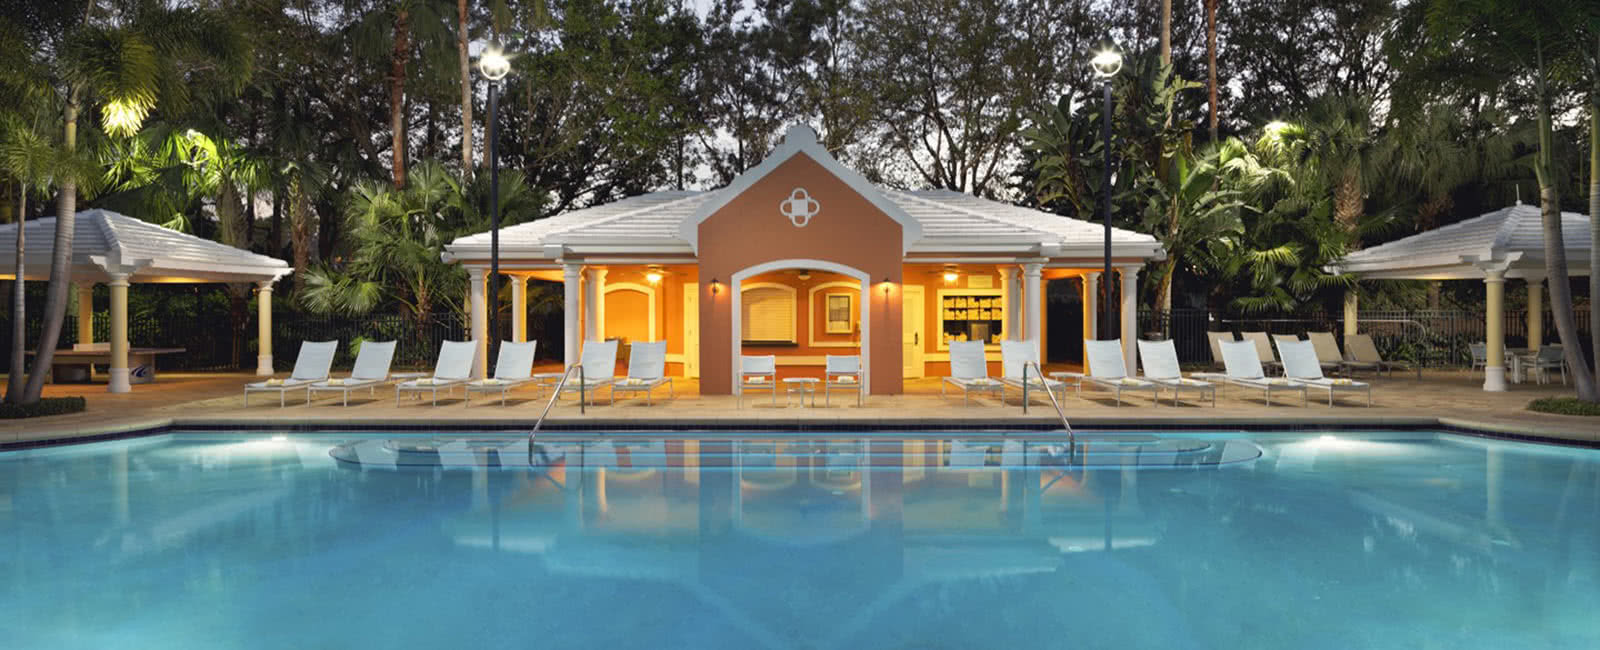 Pool Area of Hilton Grand Vacations Club at SeaWorld in Orlando, Florida